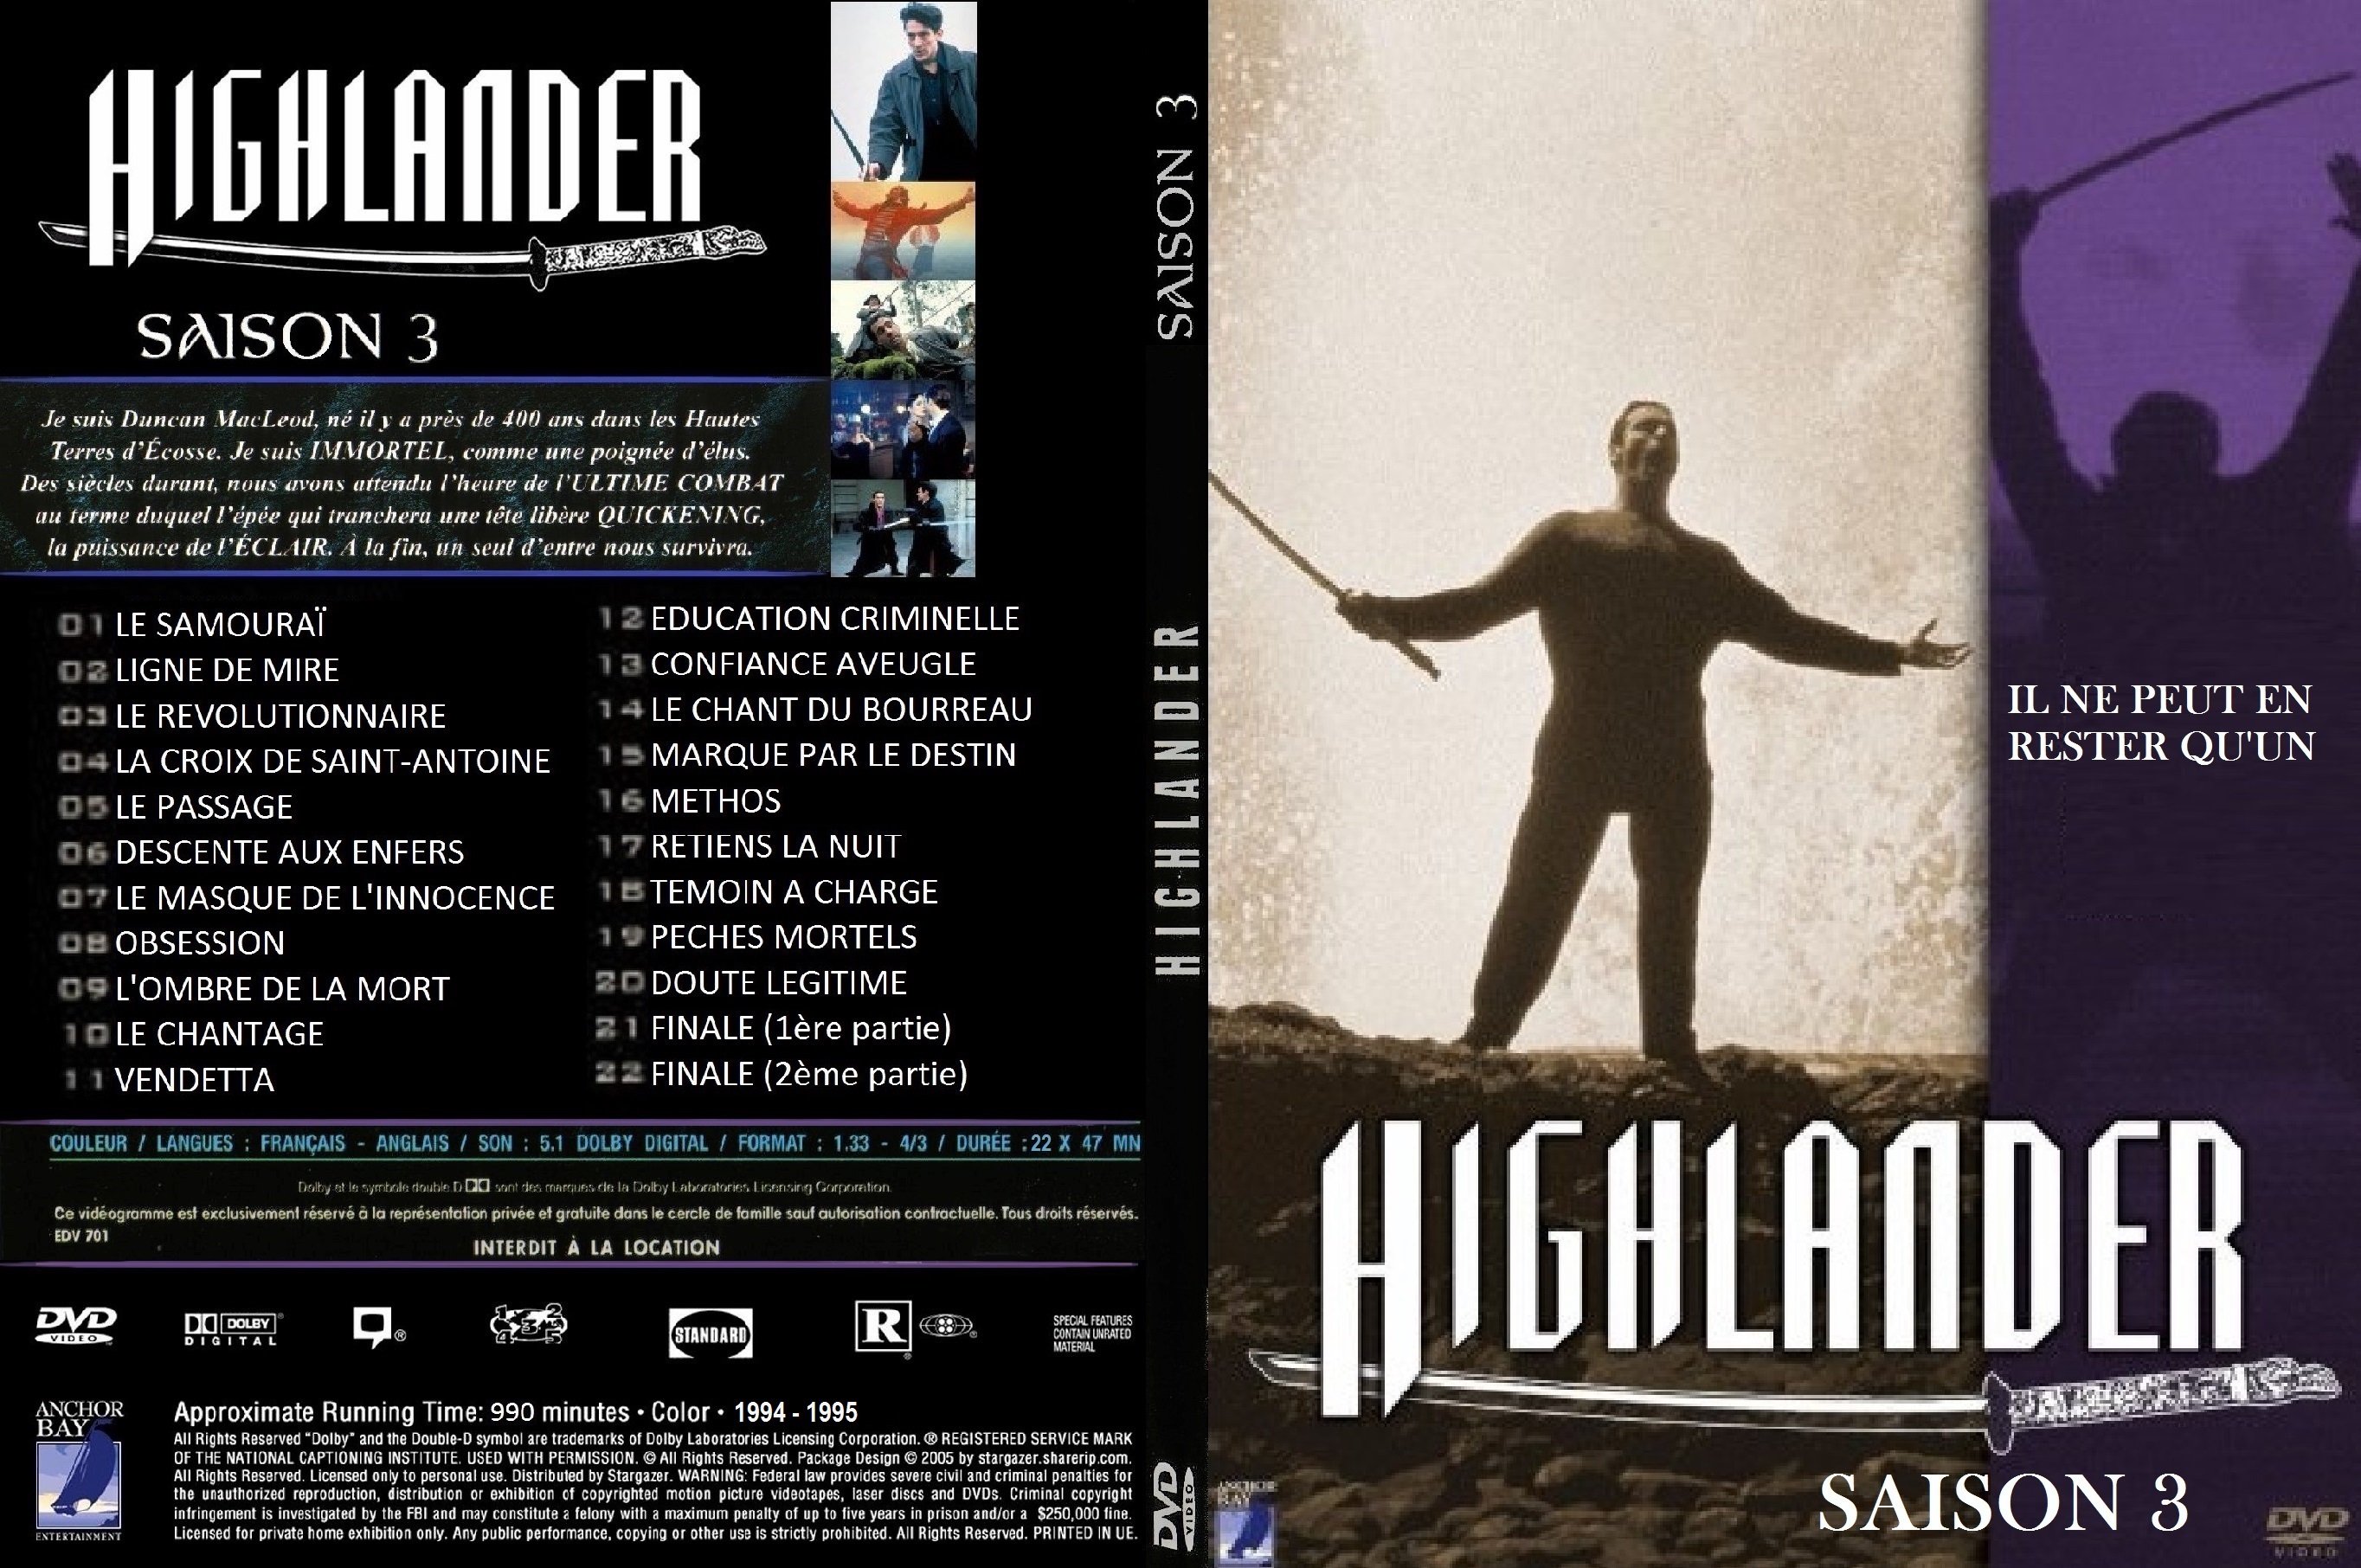 Jaquette DVD Highlander saison 3 SLIM custom